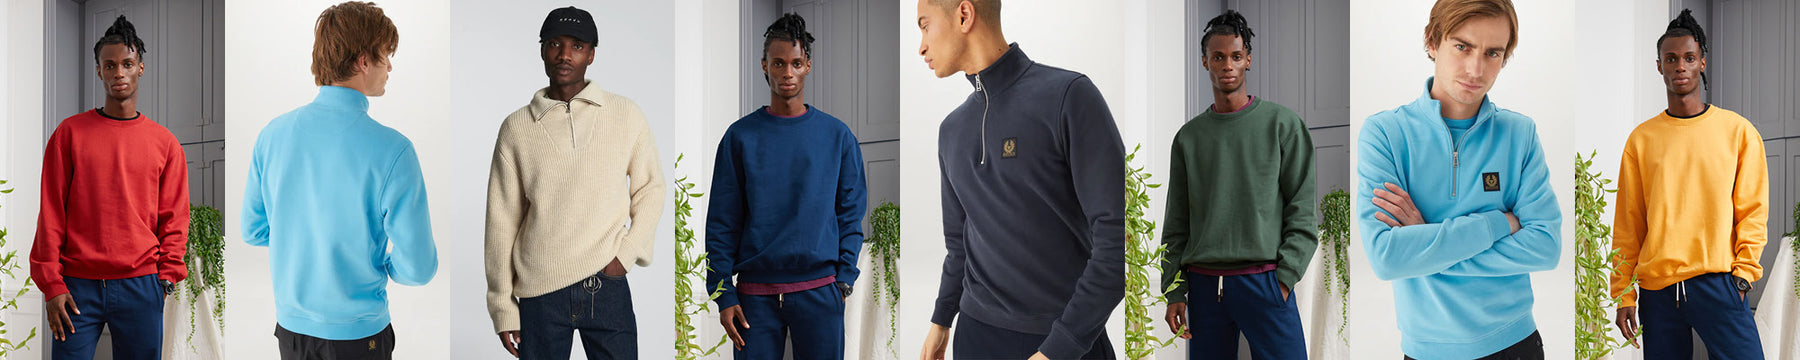 Man » Clothing » Sweatshirts